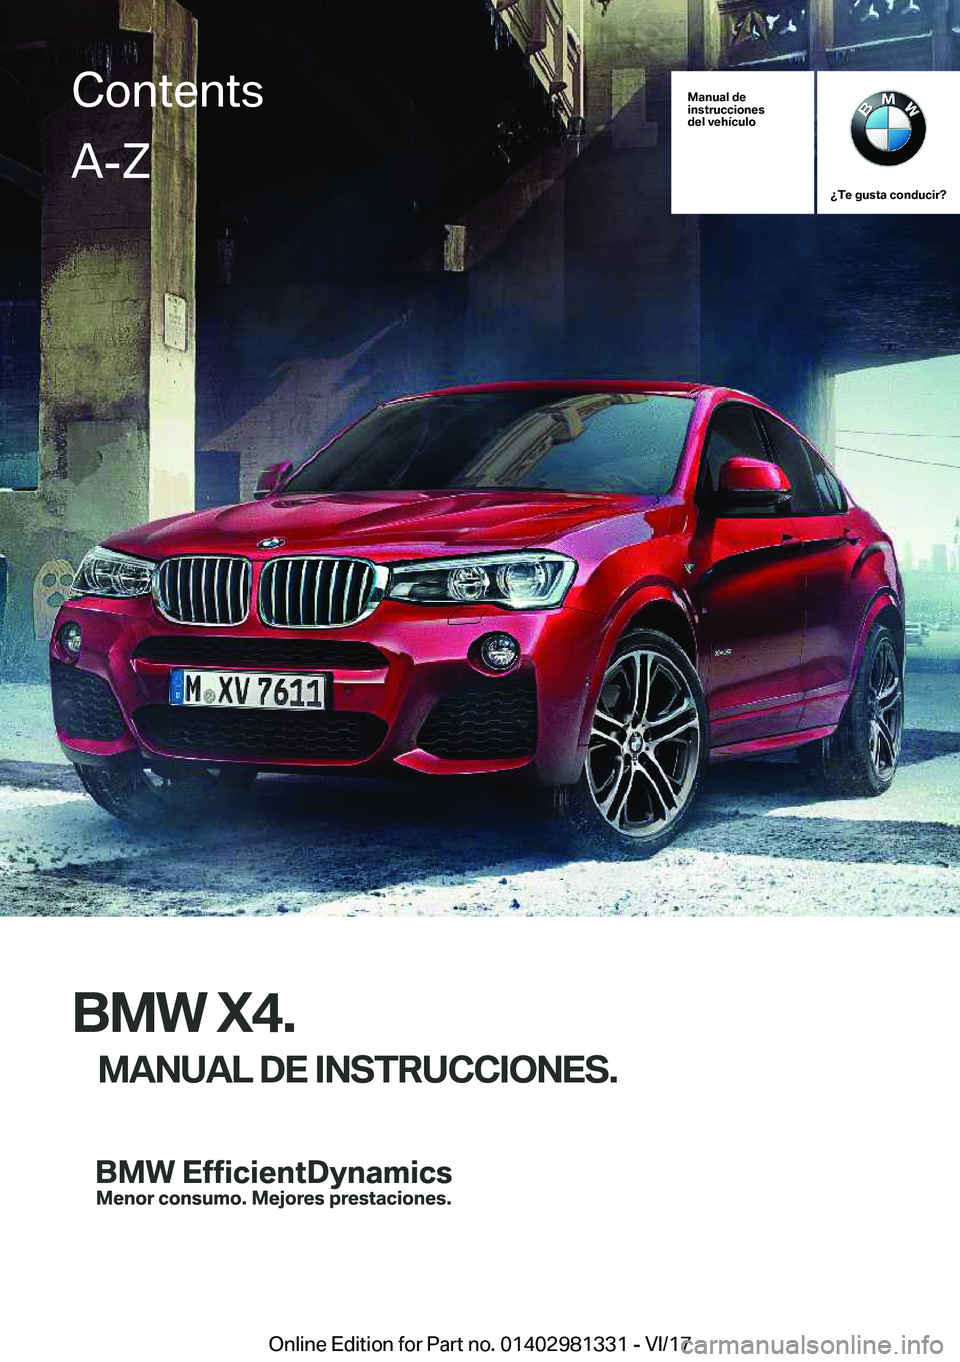 BMW X4 2018  Manuales de Empleo (in Spanish) �M�a�n�u�a�l��d�e
�i�n�s�t�r�u�c�c�i�o�n�e�s
�d�e�l��v�e�h�